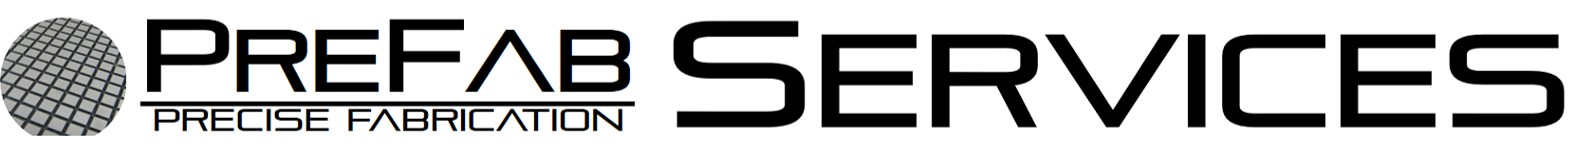 PreFab Services logo